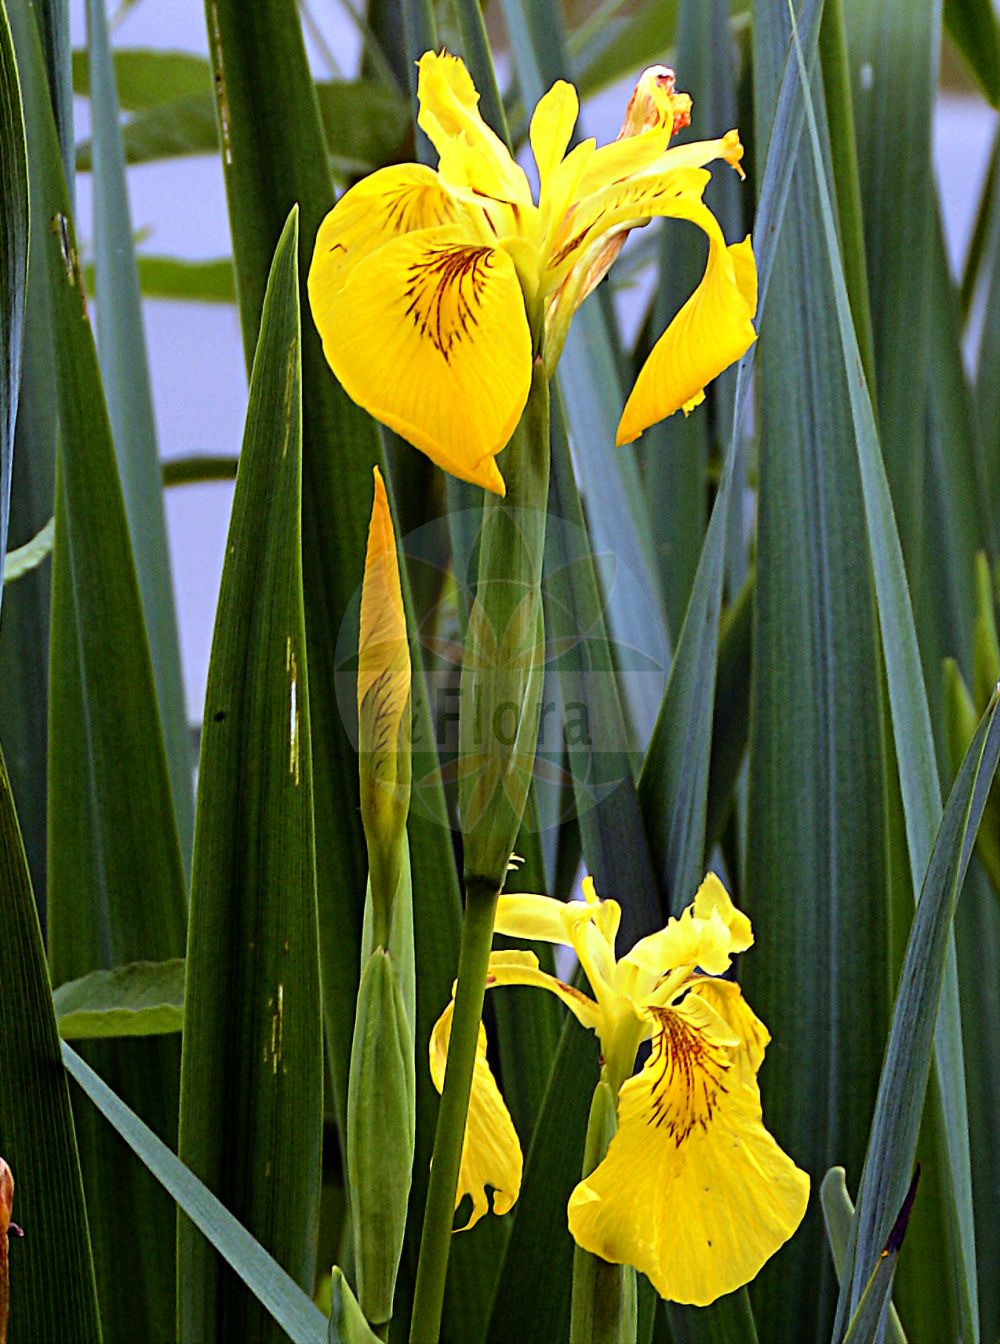 Foto von Iris pseudacorus (Sumpf-Schwertlilie - Yellow Iris). ---- Photo of Iris pseudacorus (Sumpf-Schwertlilie - Yellow Iris).(Iris pseudacorus,Sumpf-Schwertlilie,Yellow Iris,Acorus adulterinus,Colchicum falcifolium,Iris acoriformis,Iris acoroides,Iris bastardii,Iris curtopetala,Iris flava,Iris lutea,Iris pallidior,Iris paludosa,Iris palustris,Iris pseudacorus,Iris sativa,Limnirion pseudacorus,Limniris pseudacorus,Moraea candolleana,Pseudo-iris palustris,Vieusseuxia iridioides,Xiphion acoroides,Xiphion pseudacorus,Xyridion acoroideum,Xyridion pseudacorus,Sumpf-Schwertlilie,Gelbe Schwertlilie,Wasser-Schwertlilie,Yellow Iris,Jacob's Wort,Paleyellow Iris,Rocky Mountain Iris,Water Flag,Yellow Flag,Yellow-flag Iris,Iris,Schwertlilie,Iris,Iridaceae,Schwertliliengewächse,Iris family)